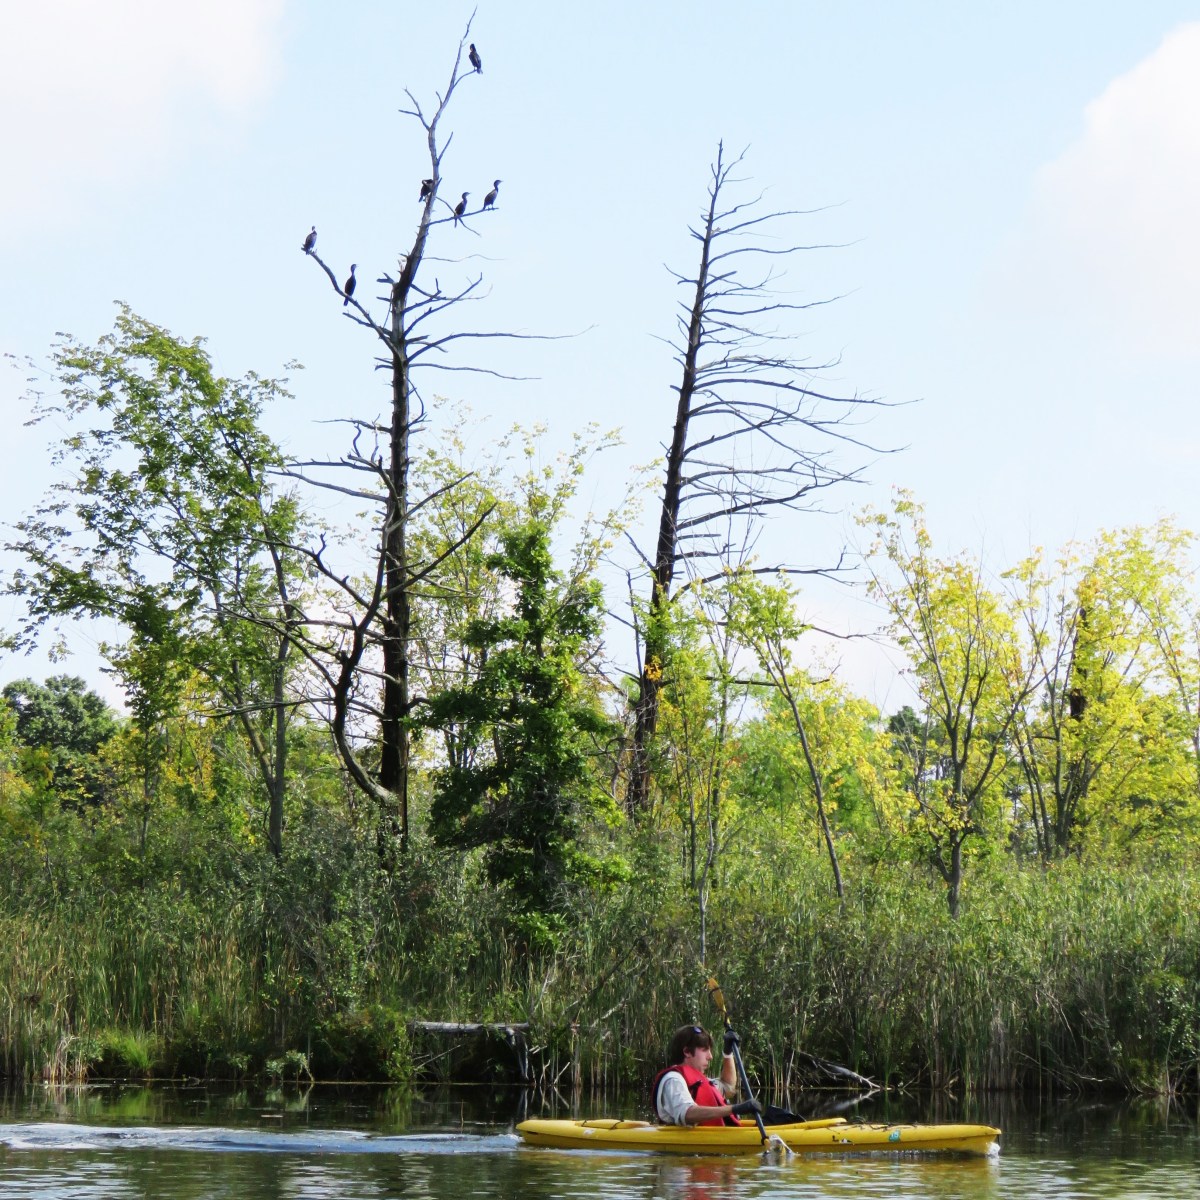 A kayaker paddles in a lake